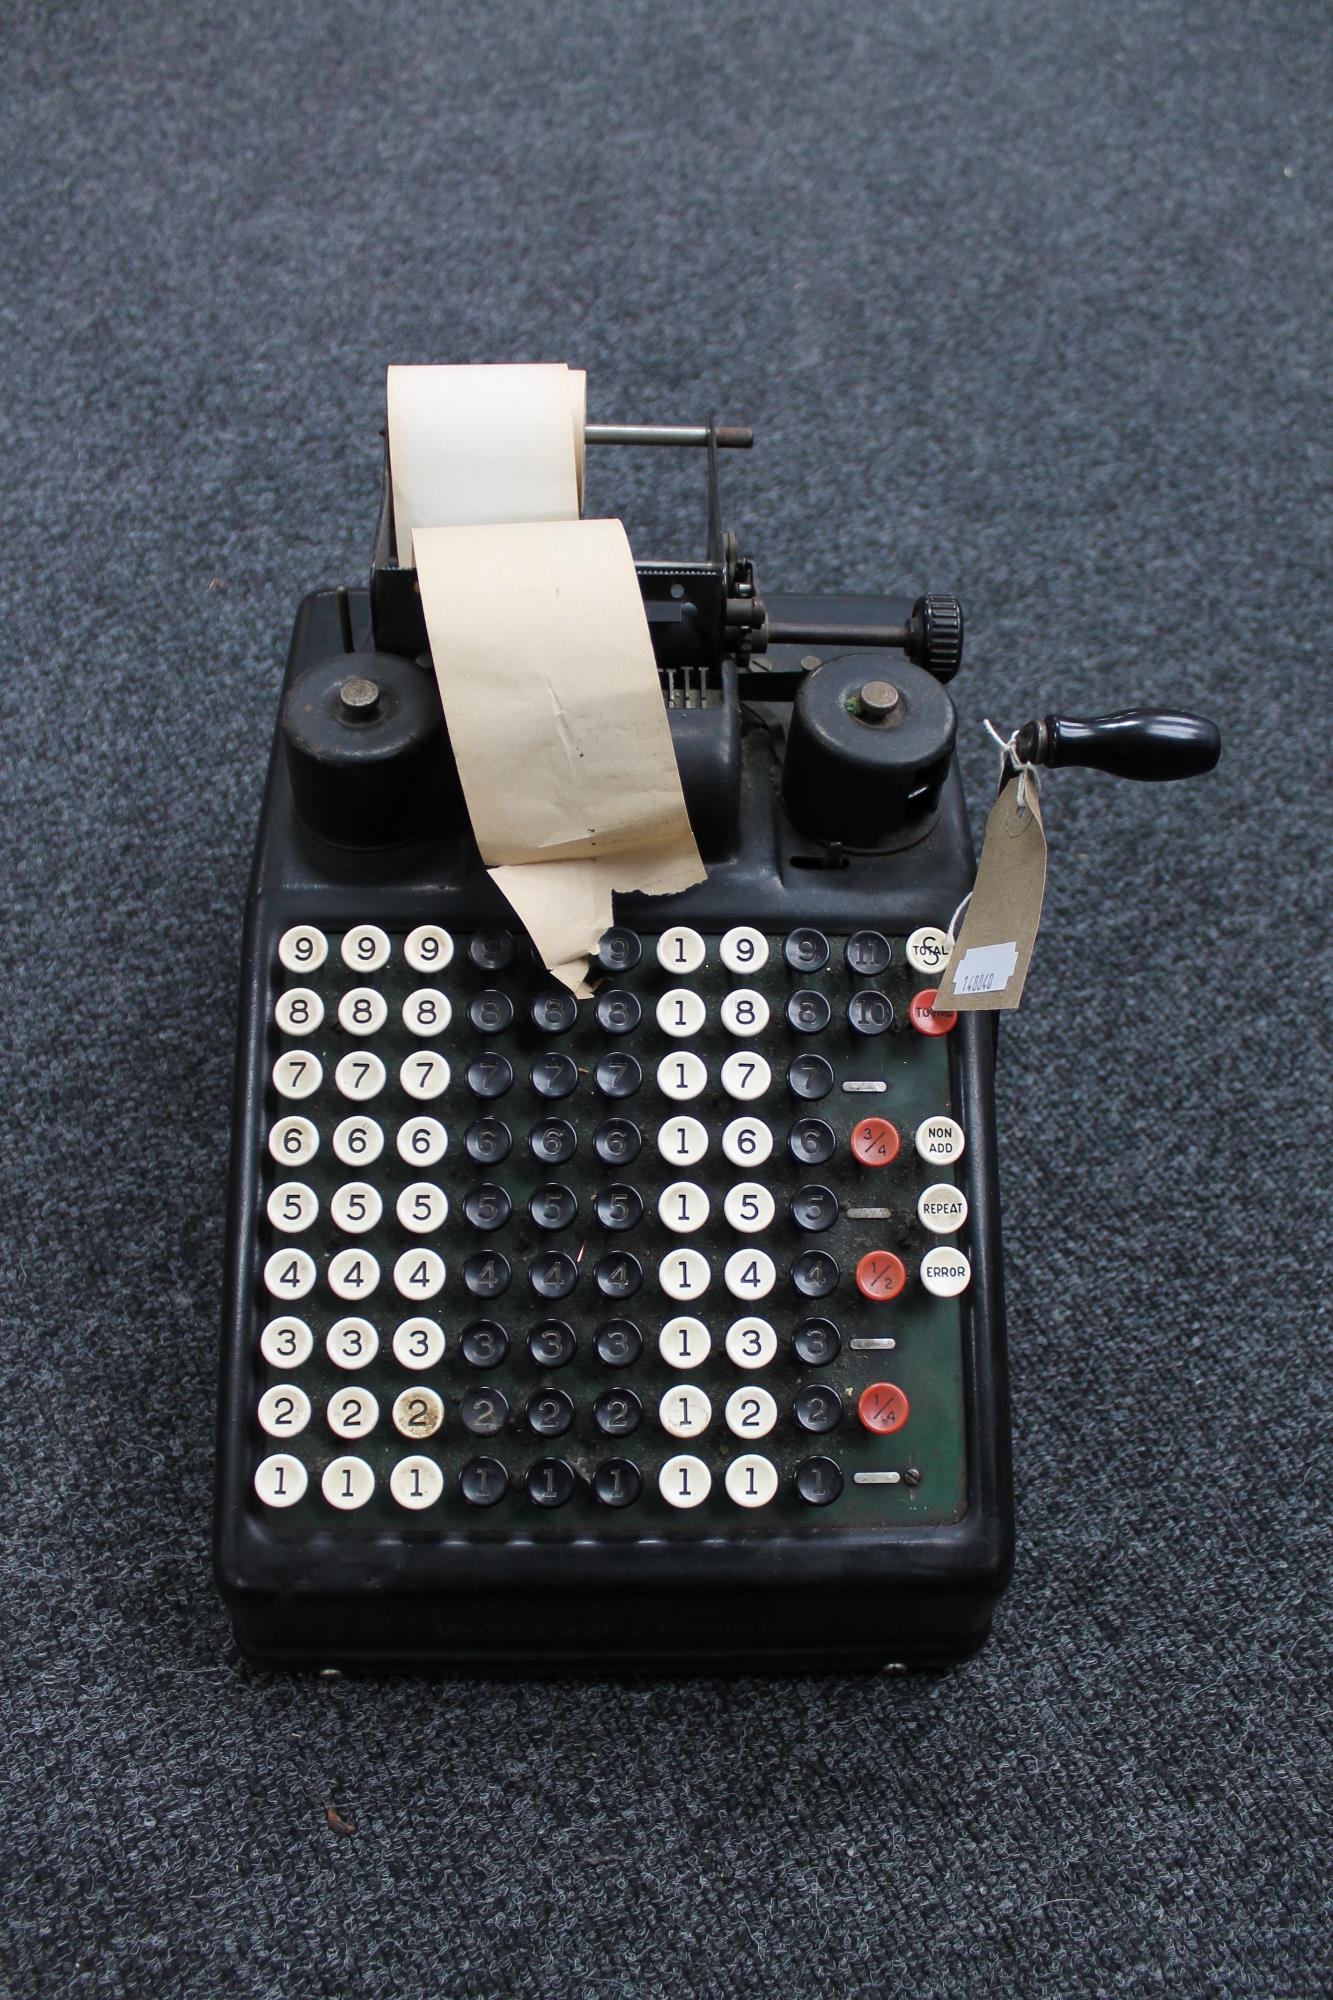 A vintage American Burrough's Portable adding machine